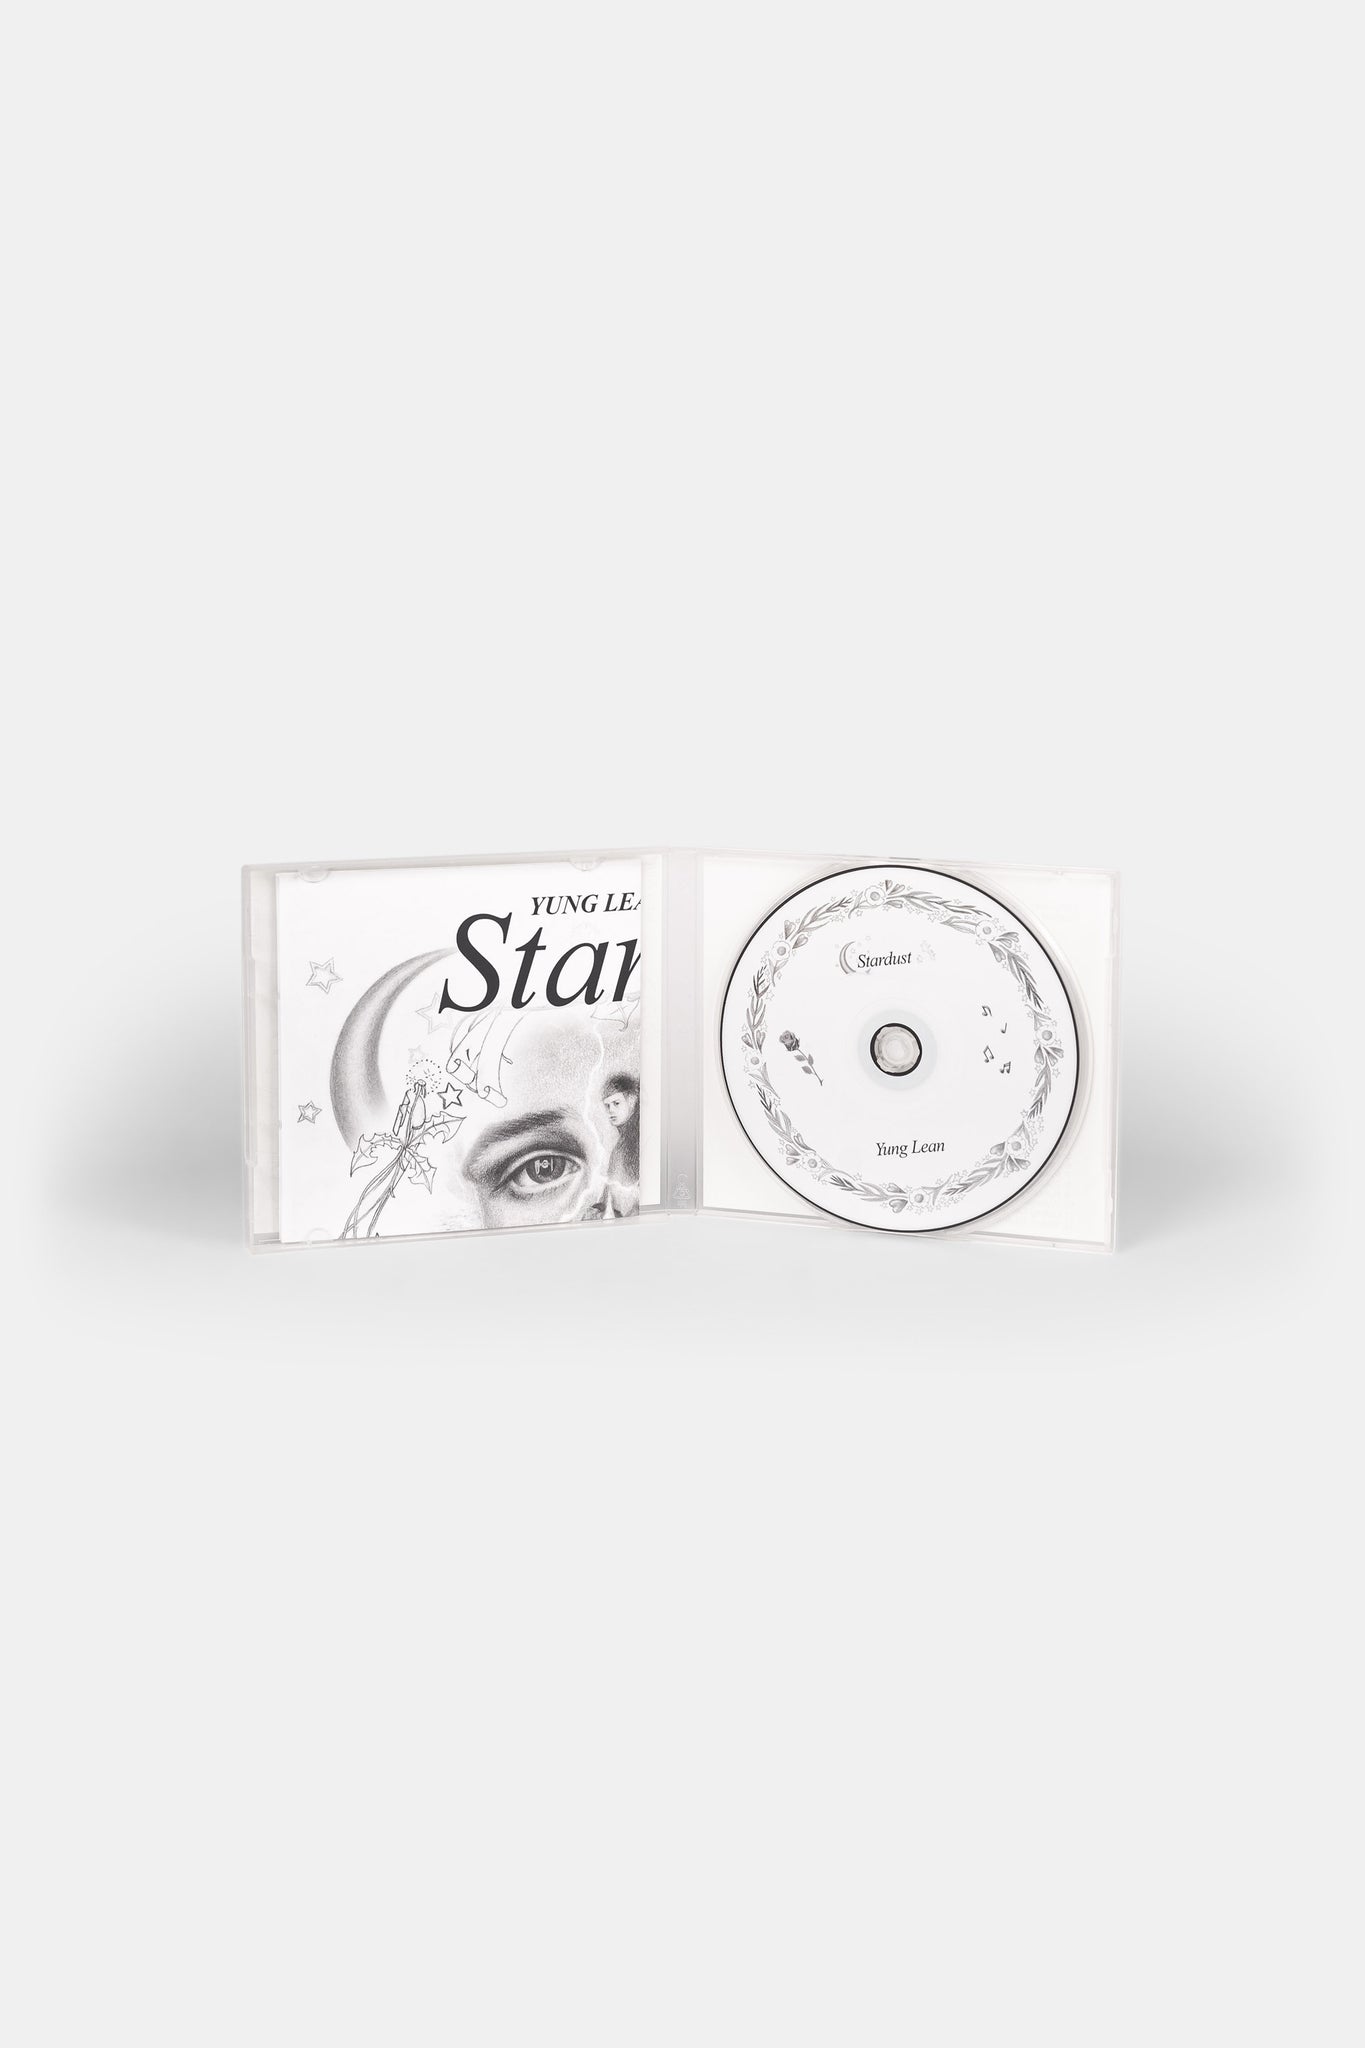 STARDUST CD